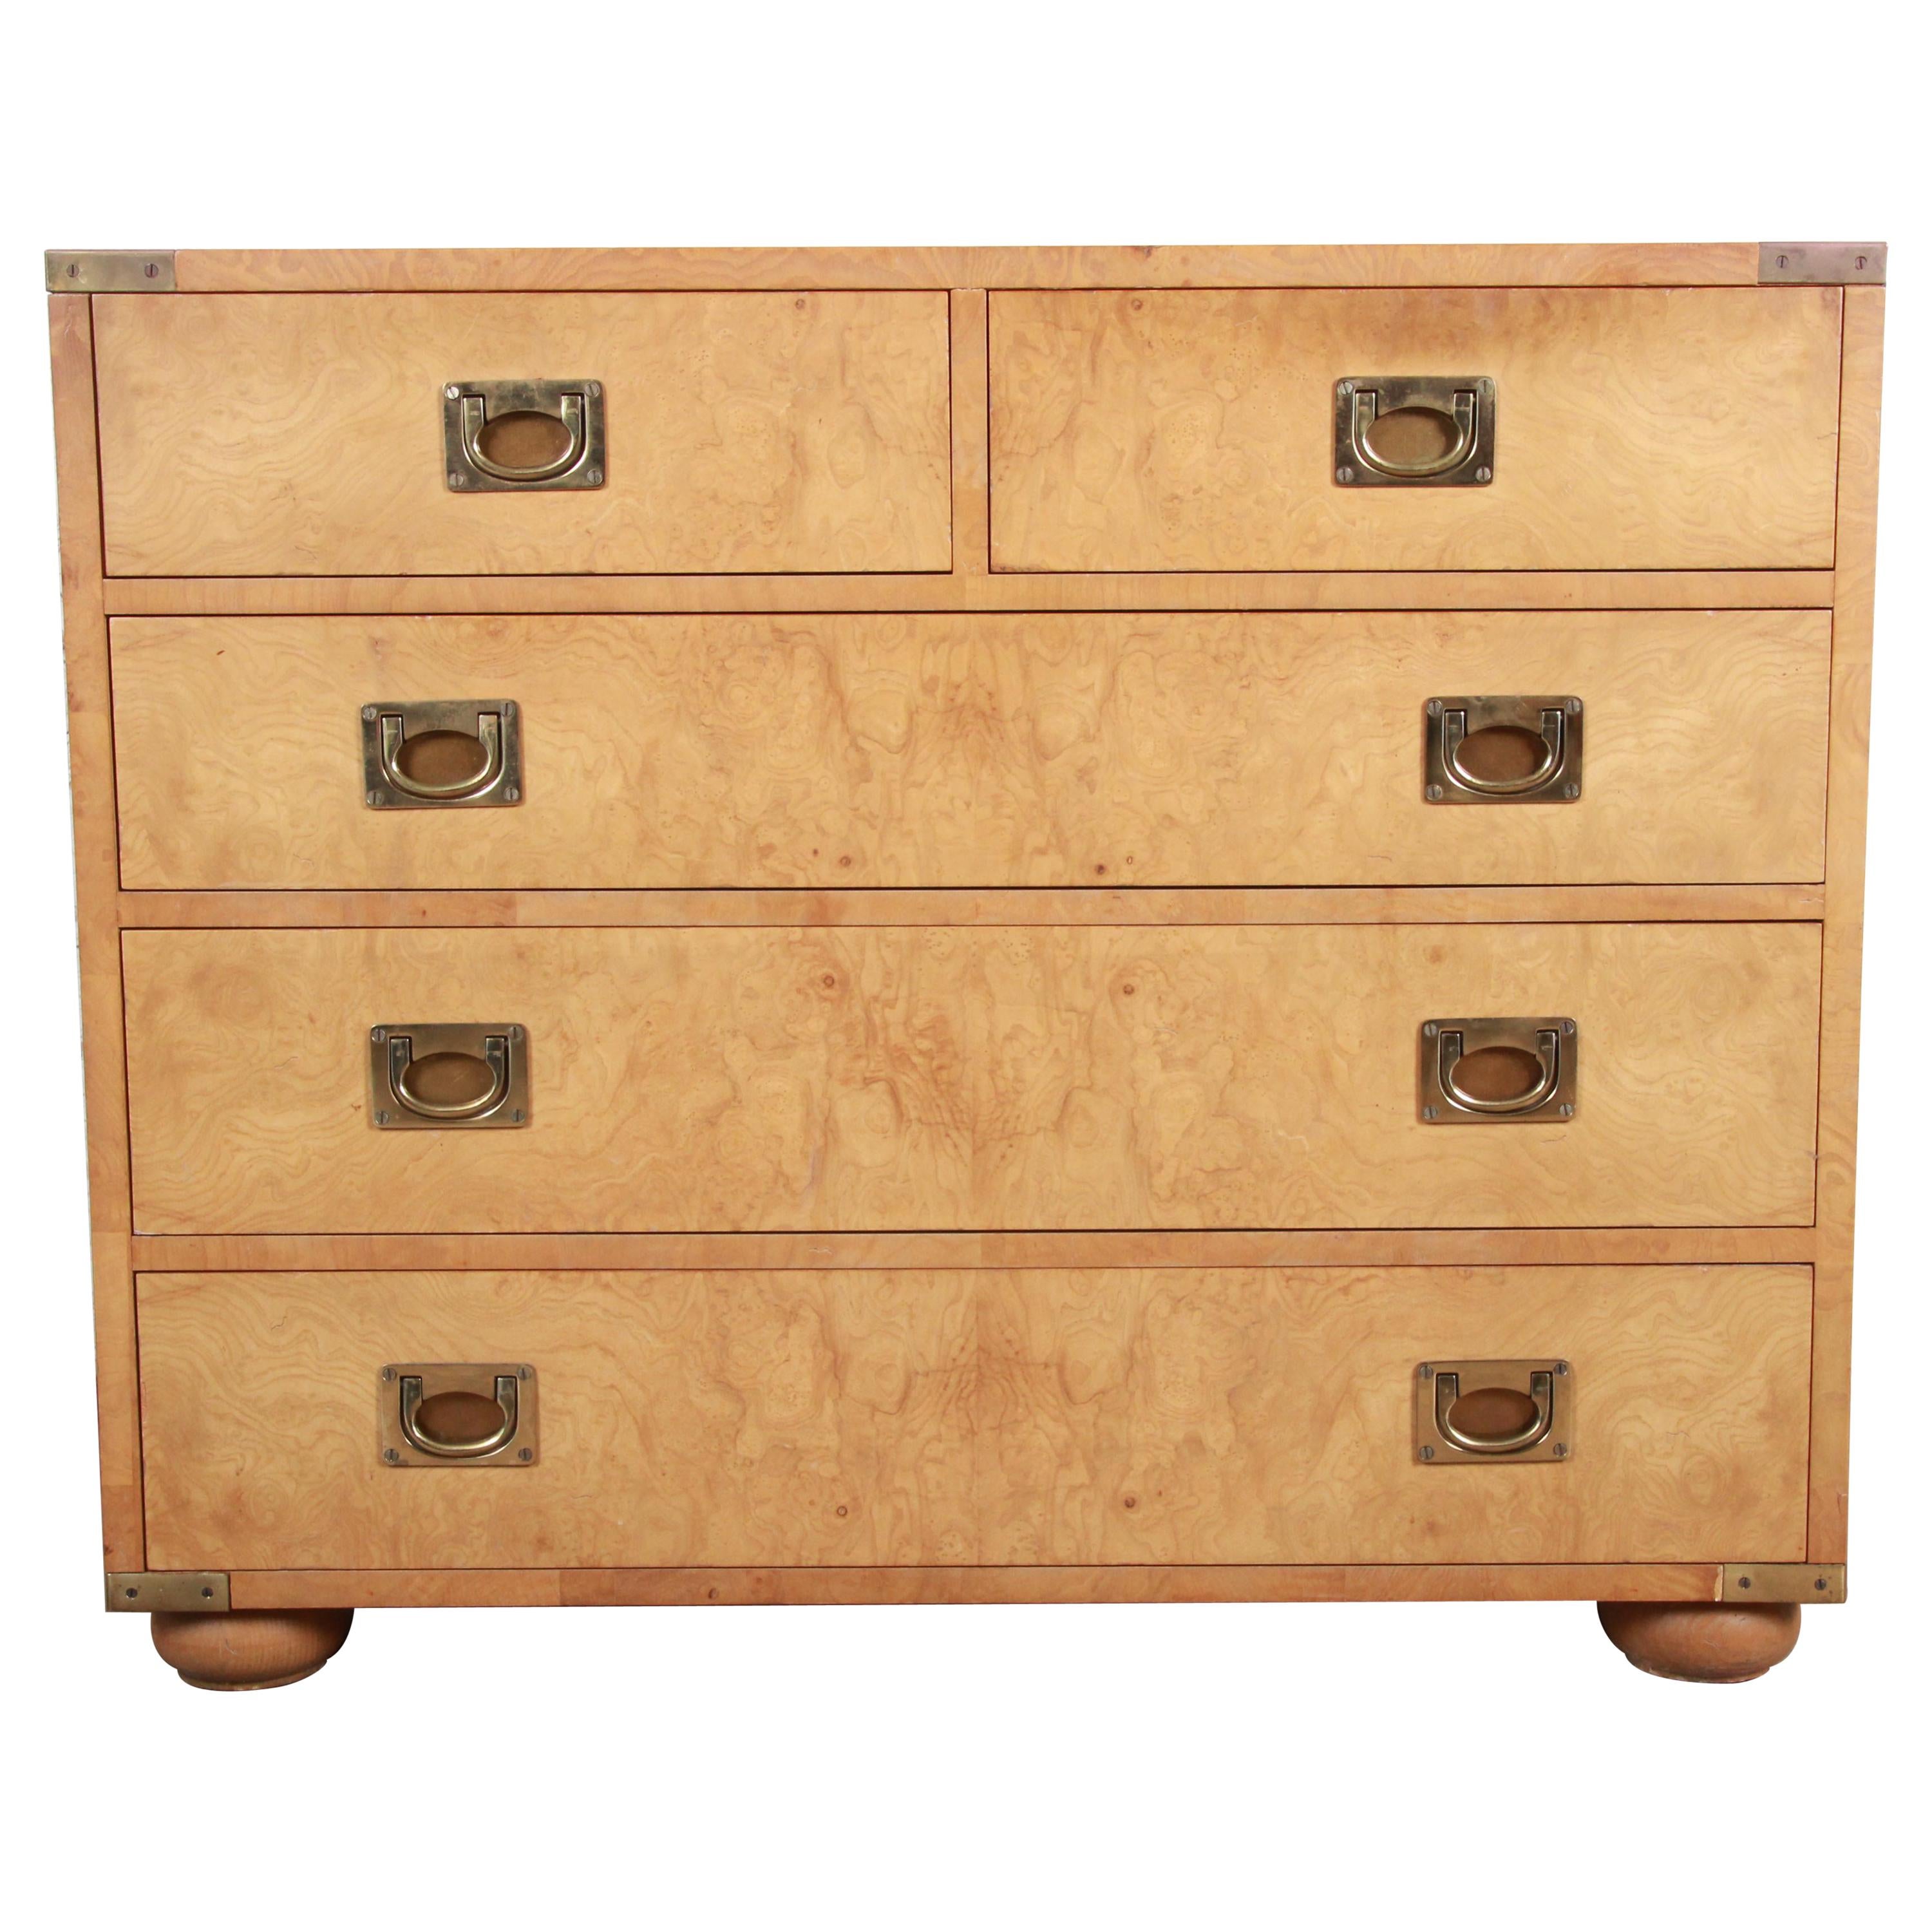 Henredon Burl Wood Campaign Style Five-Drawer Dresser Chest